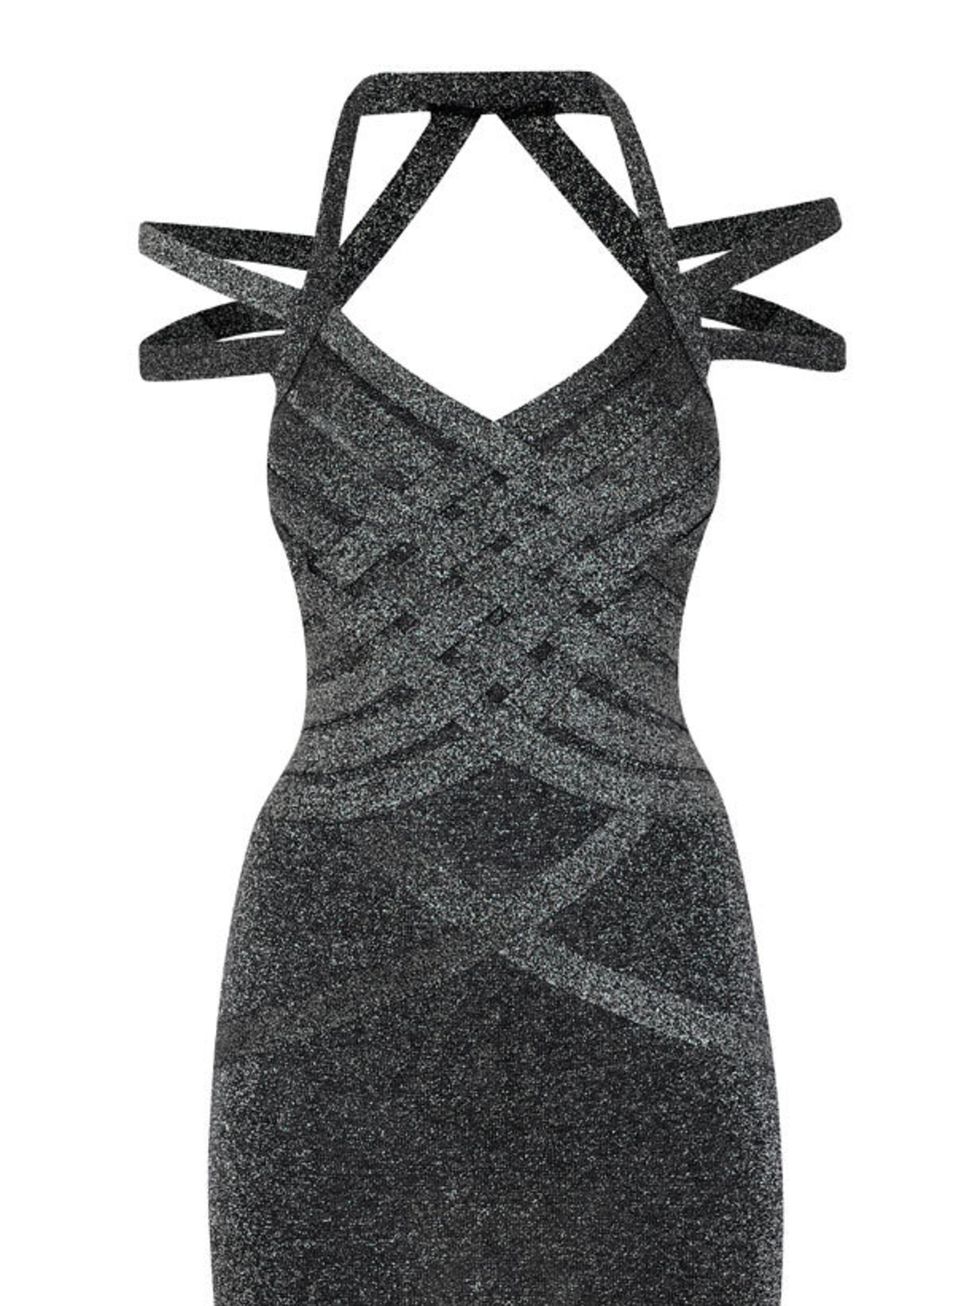 <p>House of Dereon bandage dress, £100, at <a href="http://www.selfridges.com/en/Womenswear/Strappy-shimmer-dress_143-3002410-H114020/">Selfridges</a></p>